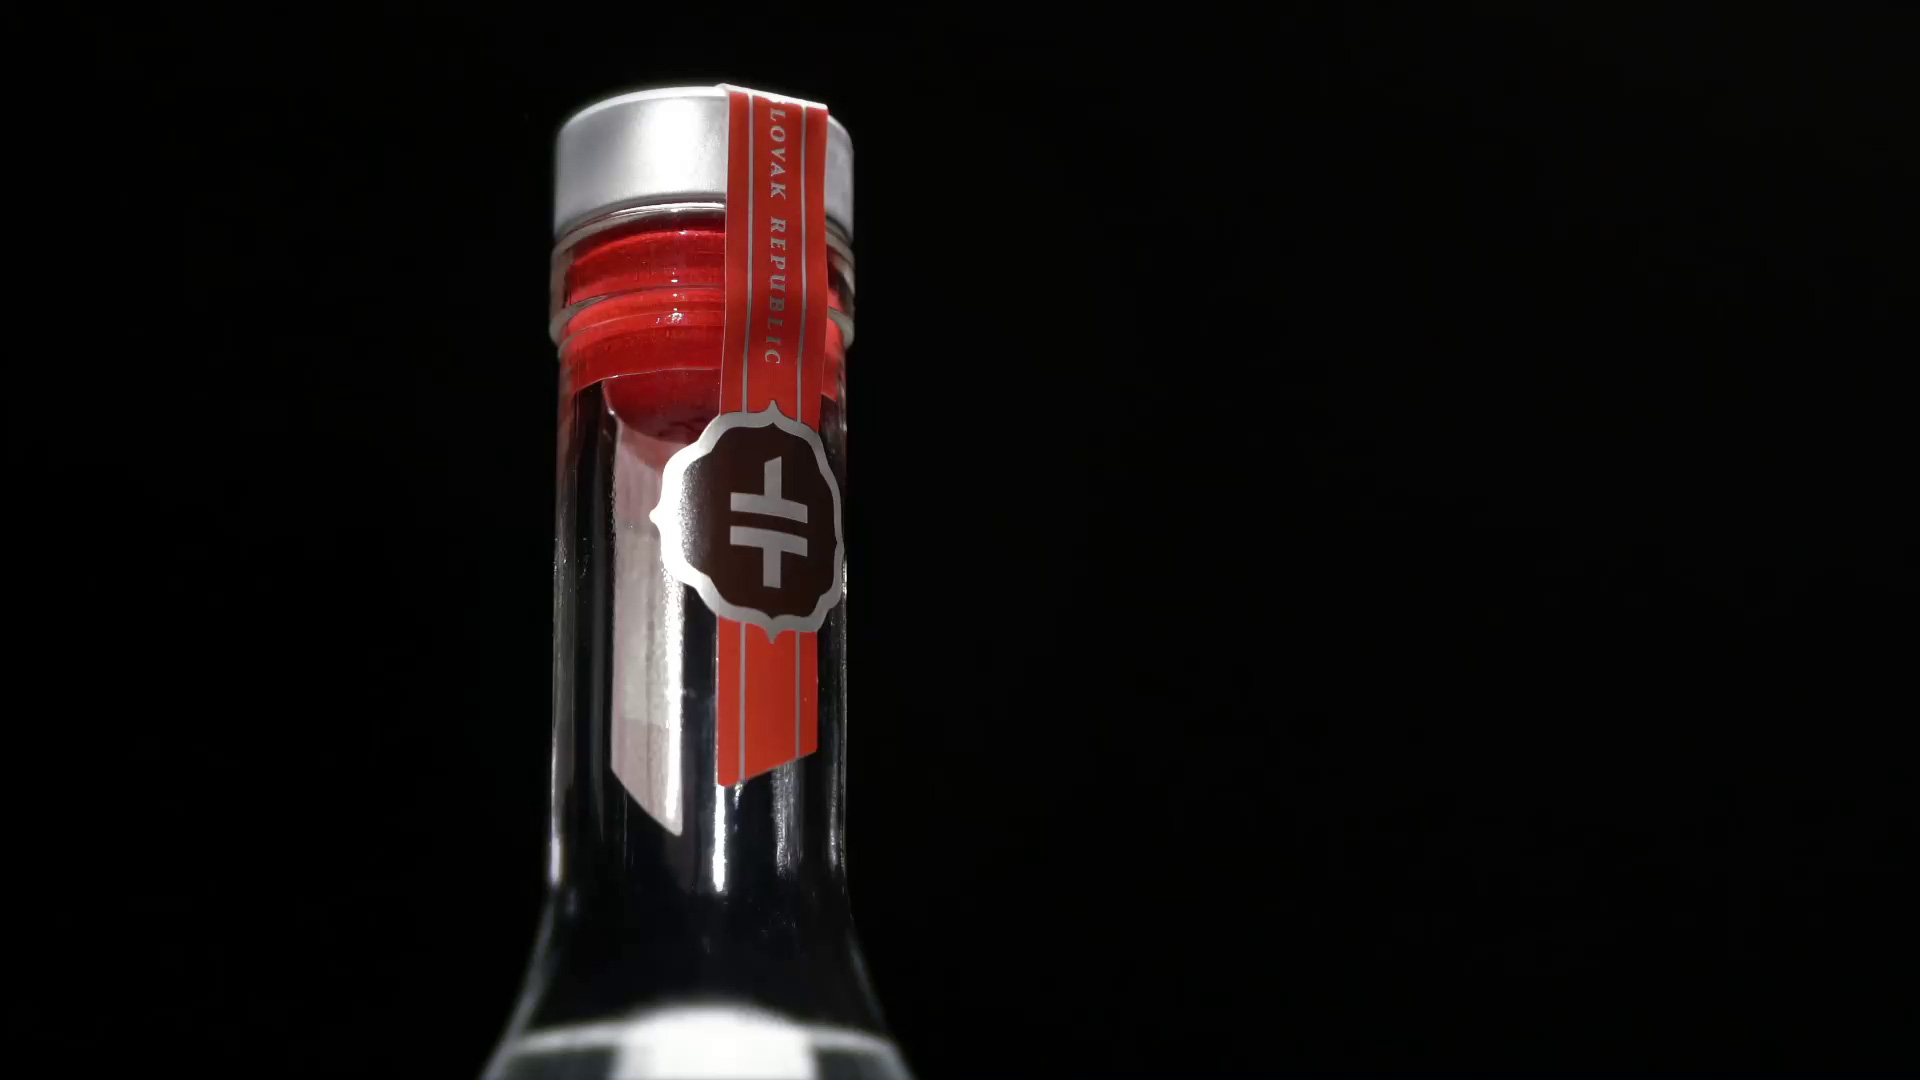 A craft vodka that's truly ultra premium. - Double Cross Vodka